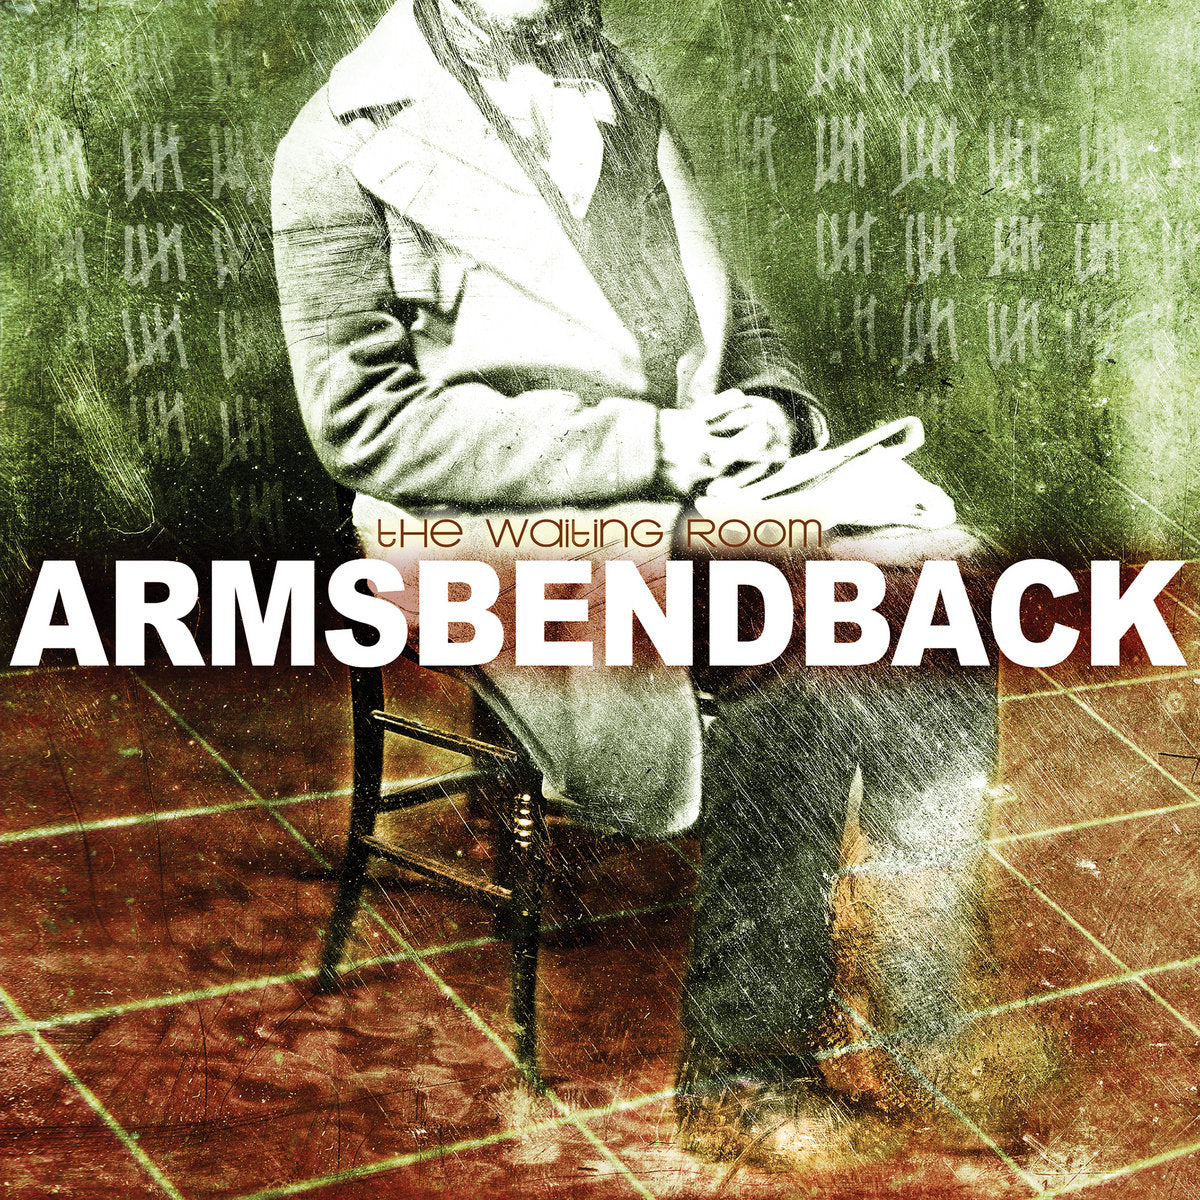 Armsbendback "The Waiting Room" CD